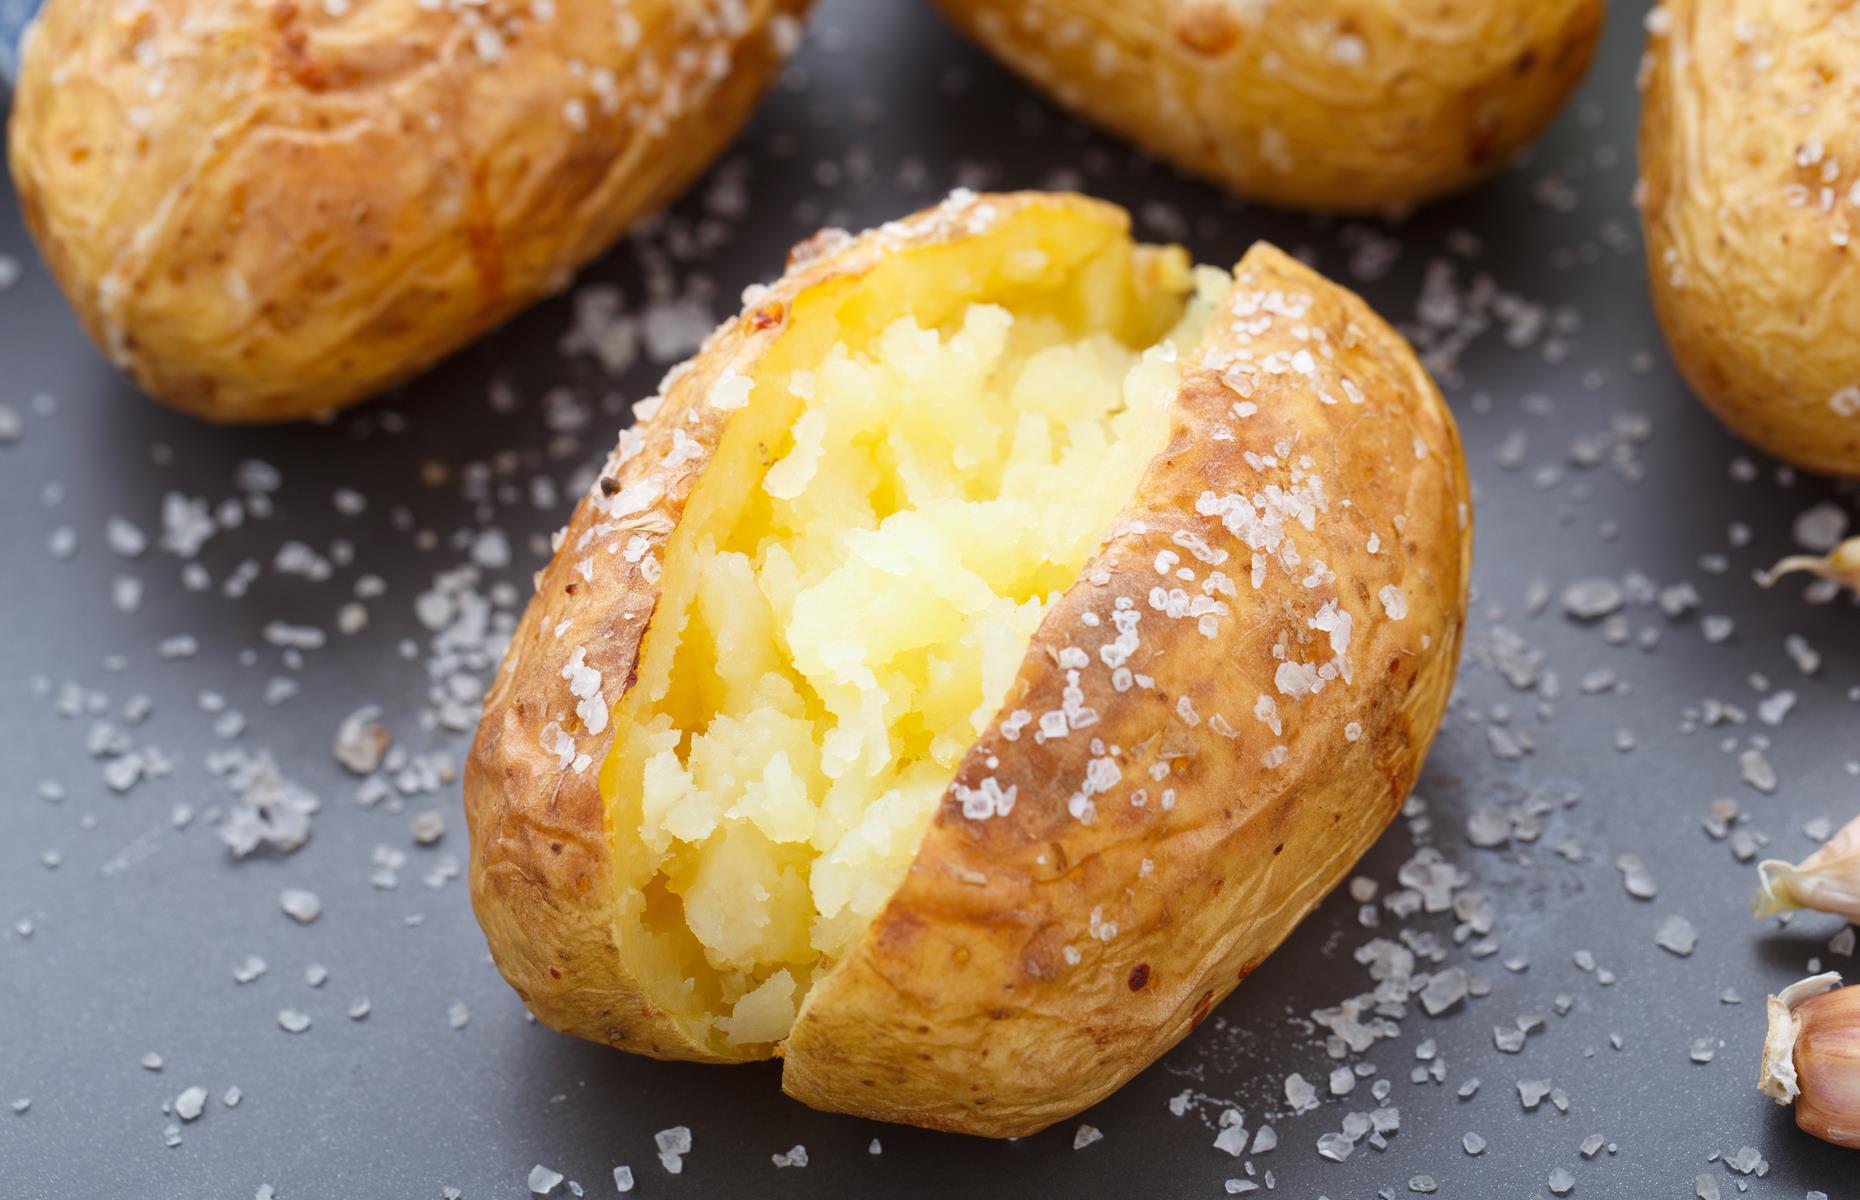 30 brilliant baked potato recipes you'll love